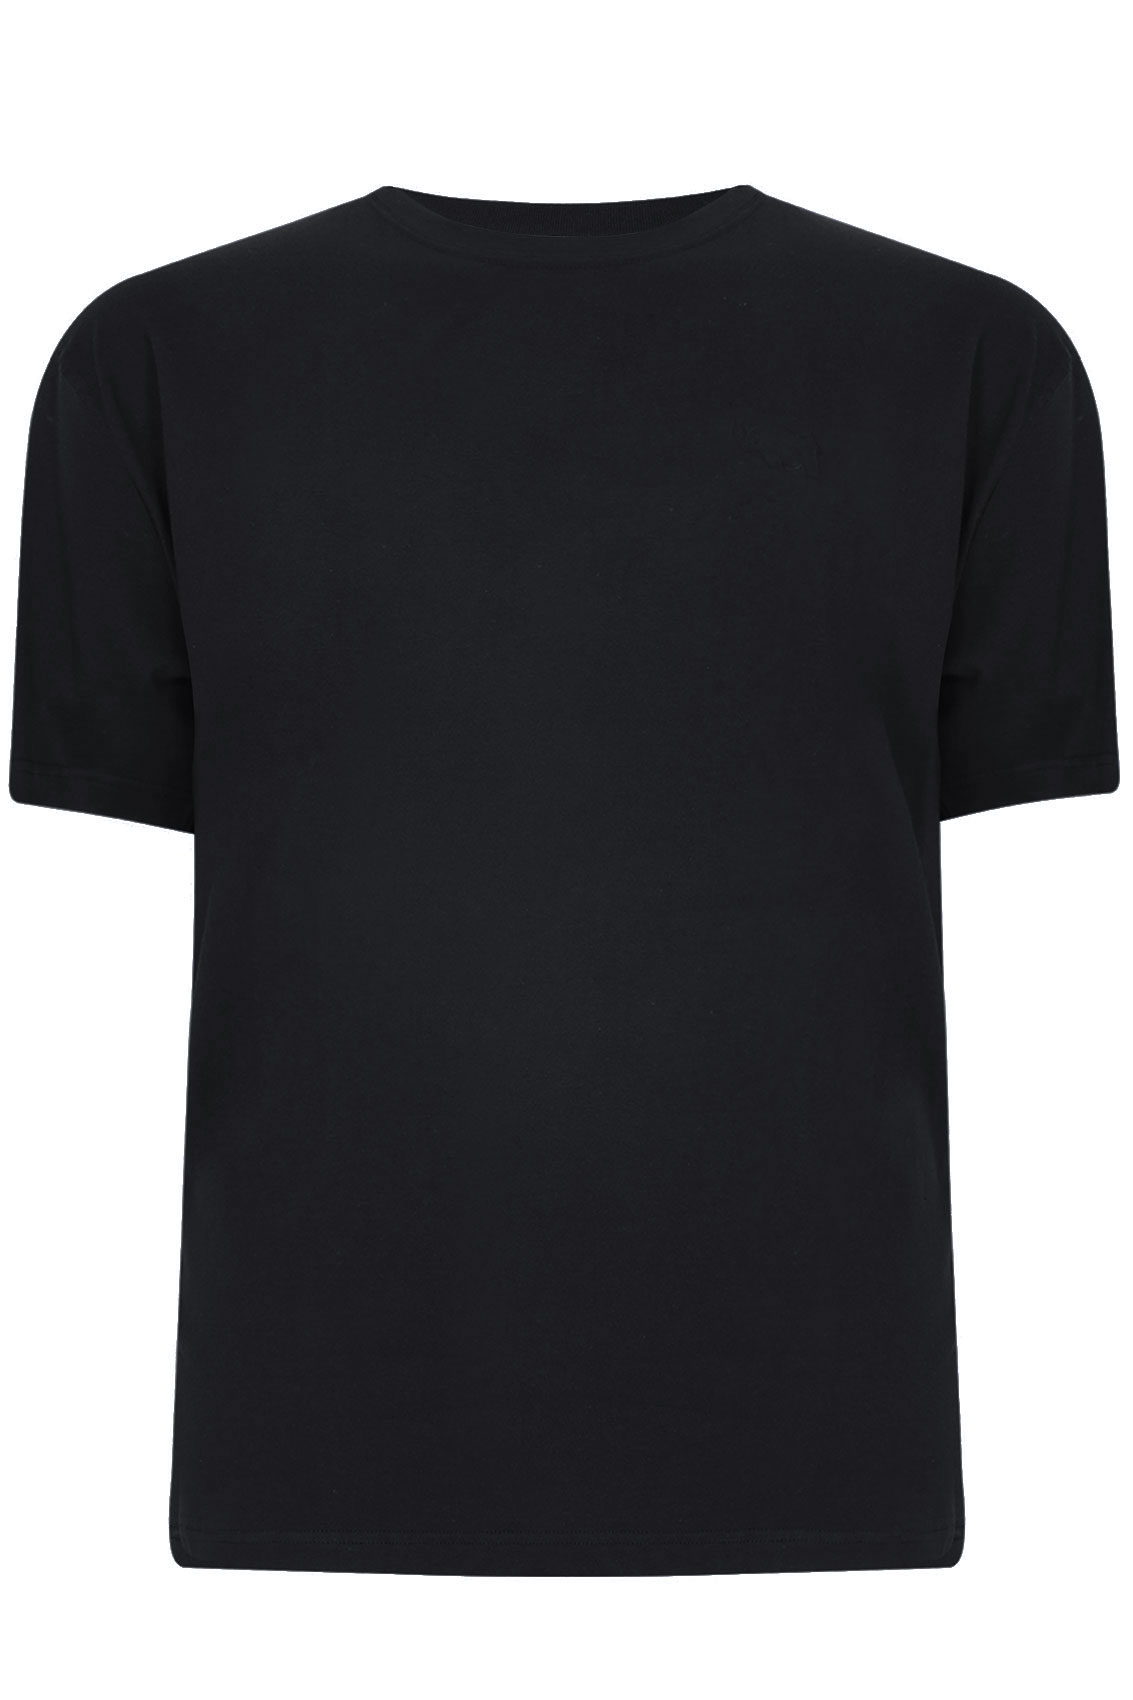 Download BadRhino Black Basic Plain Crew Neck T-Shirt Extra large ...